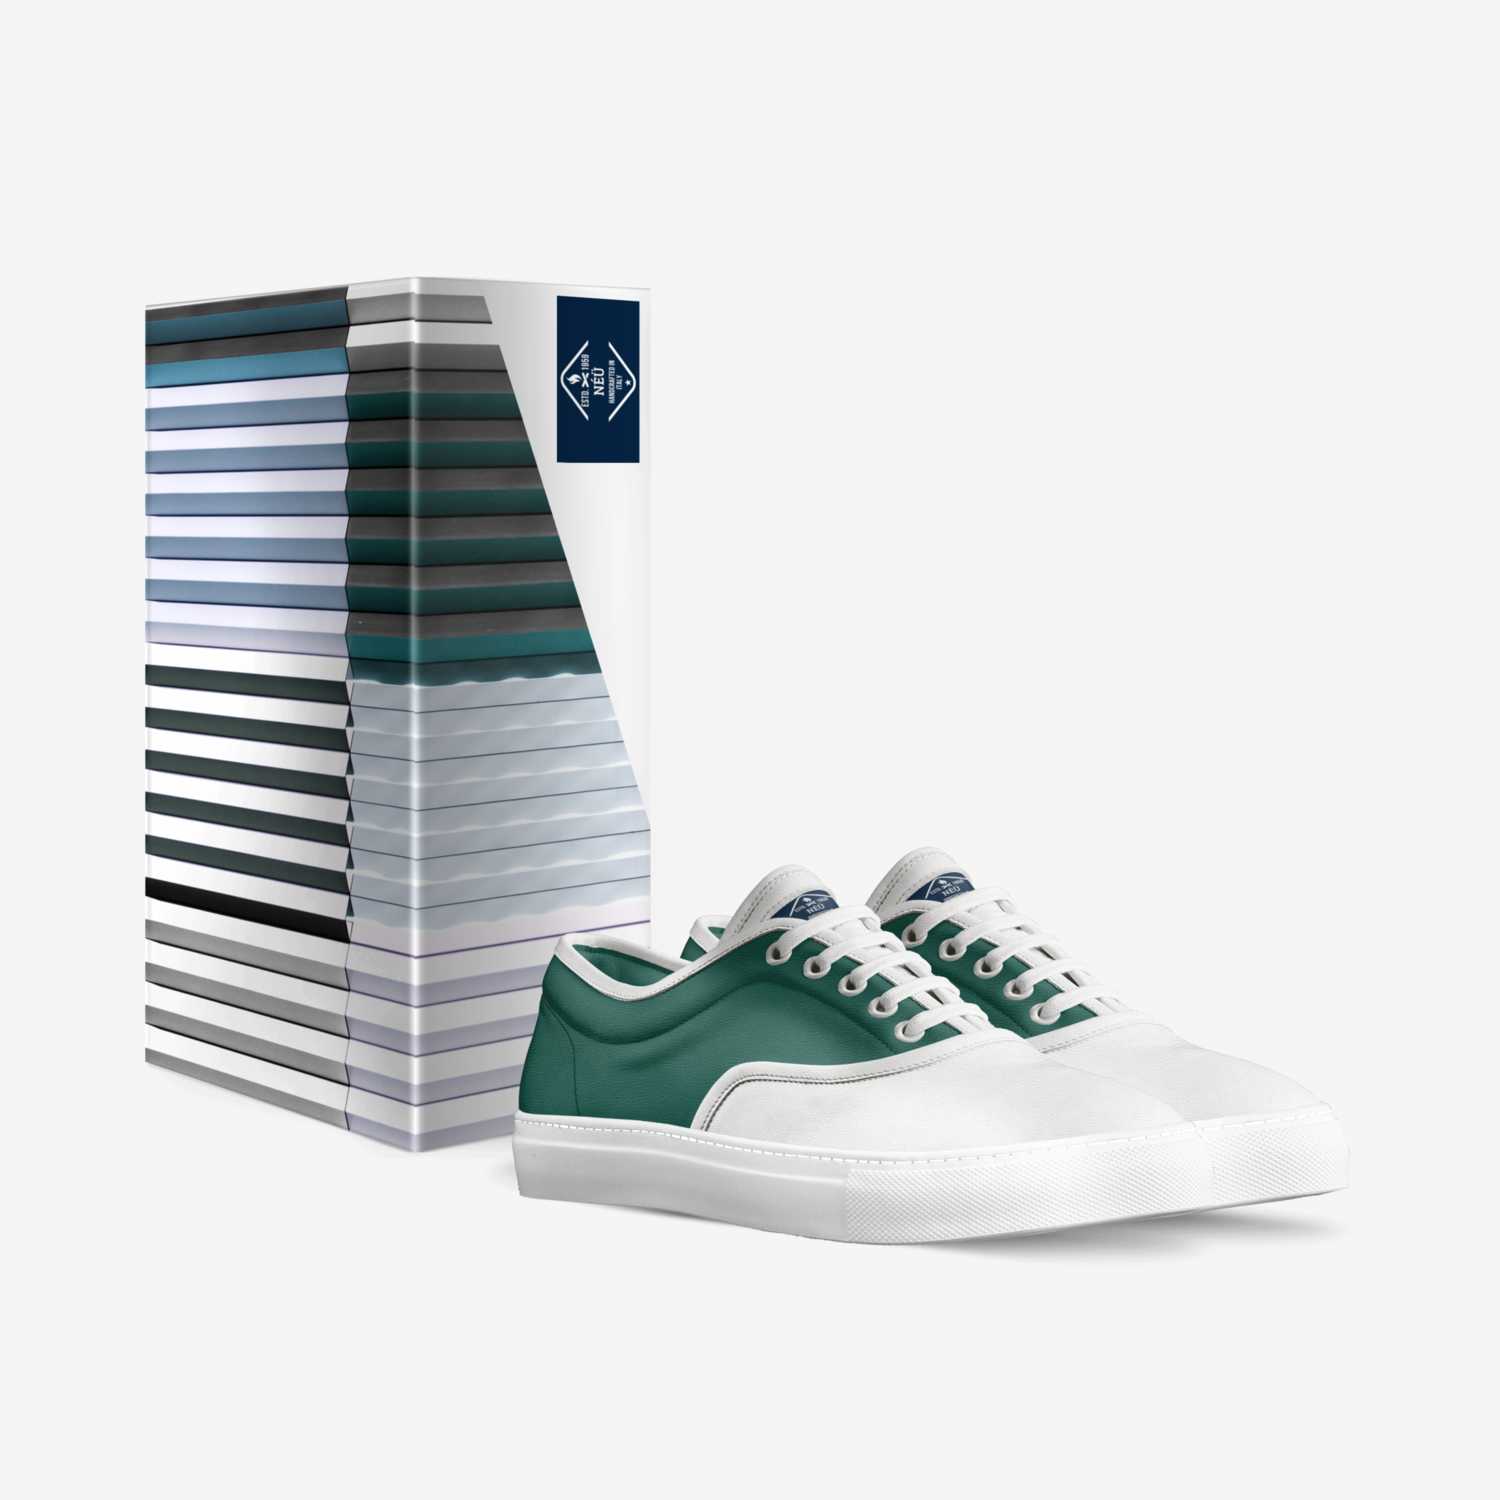 Néü custom made in Italy shoes by Jennifer Buntu | Box view